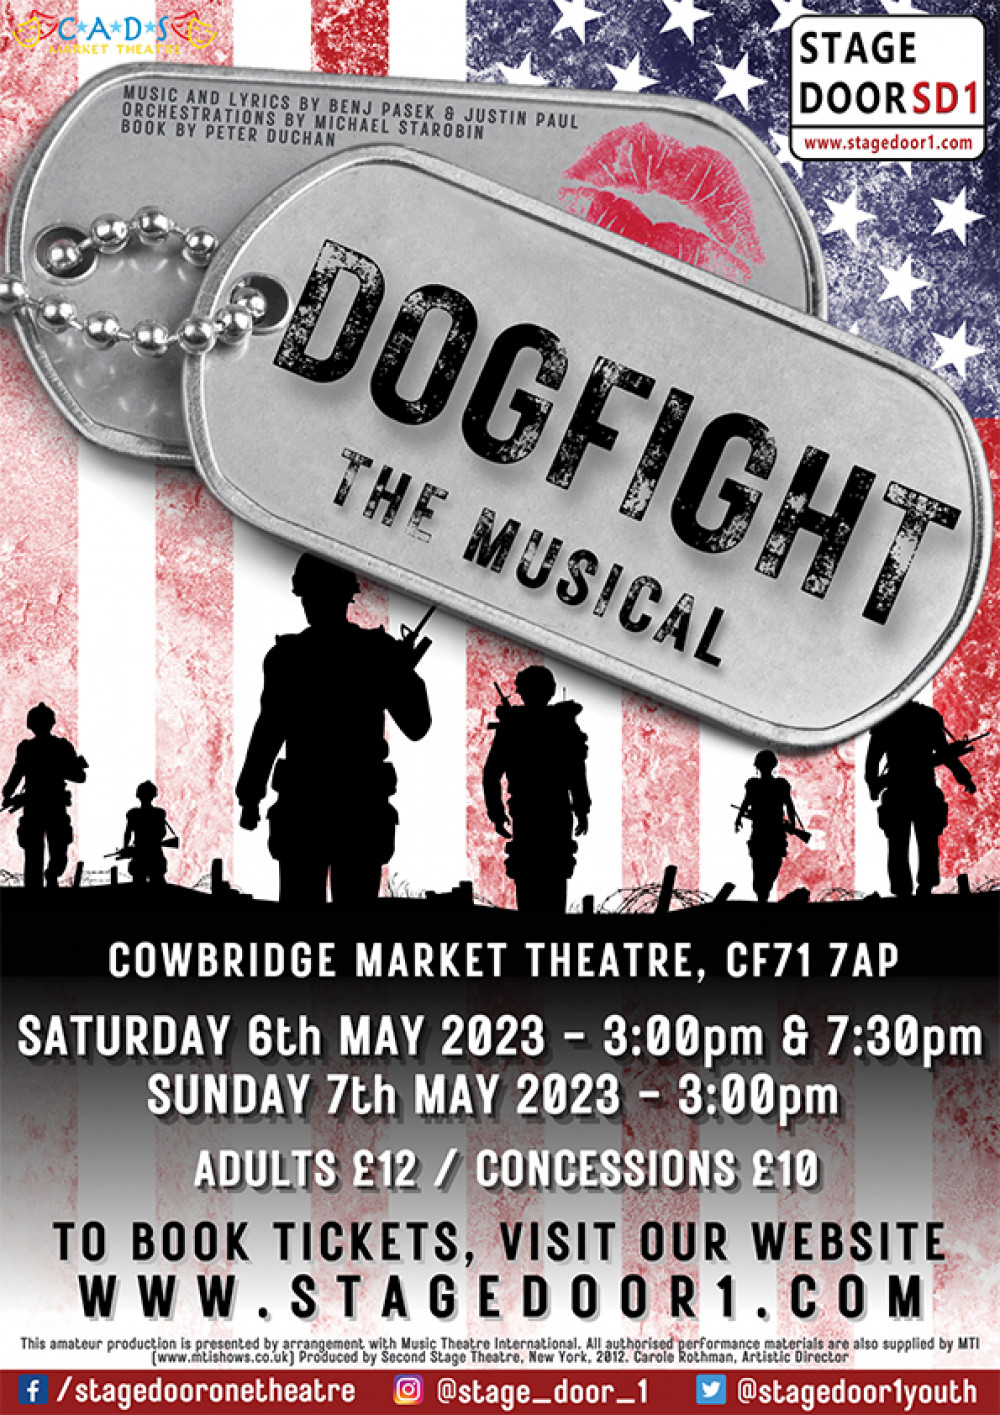 Dogfight at the Cowbridge Market Theatre